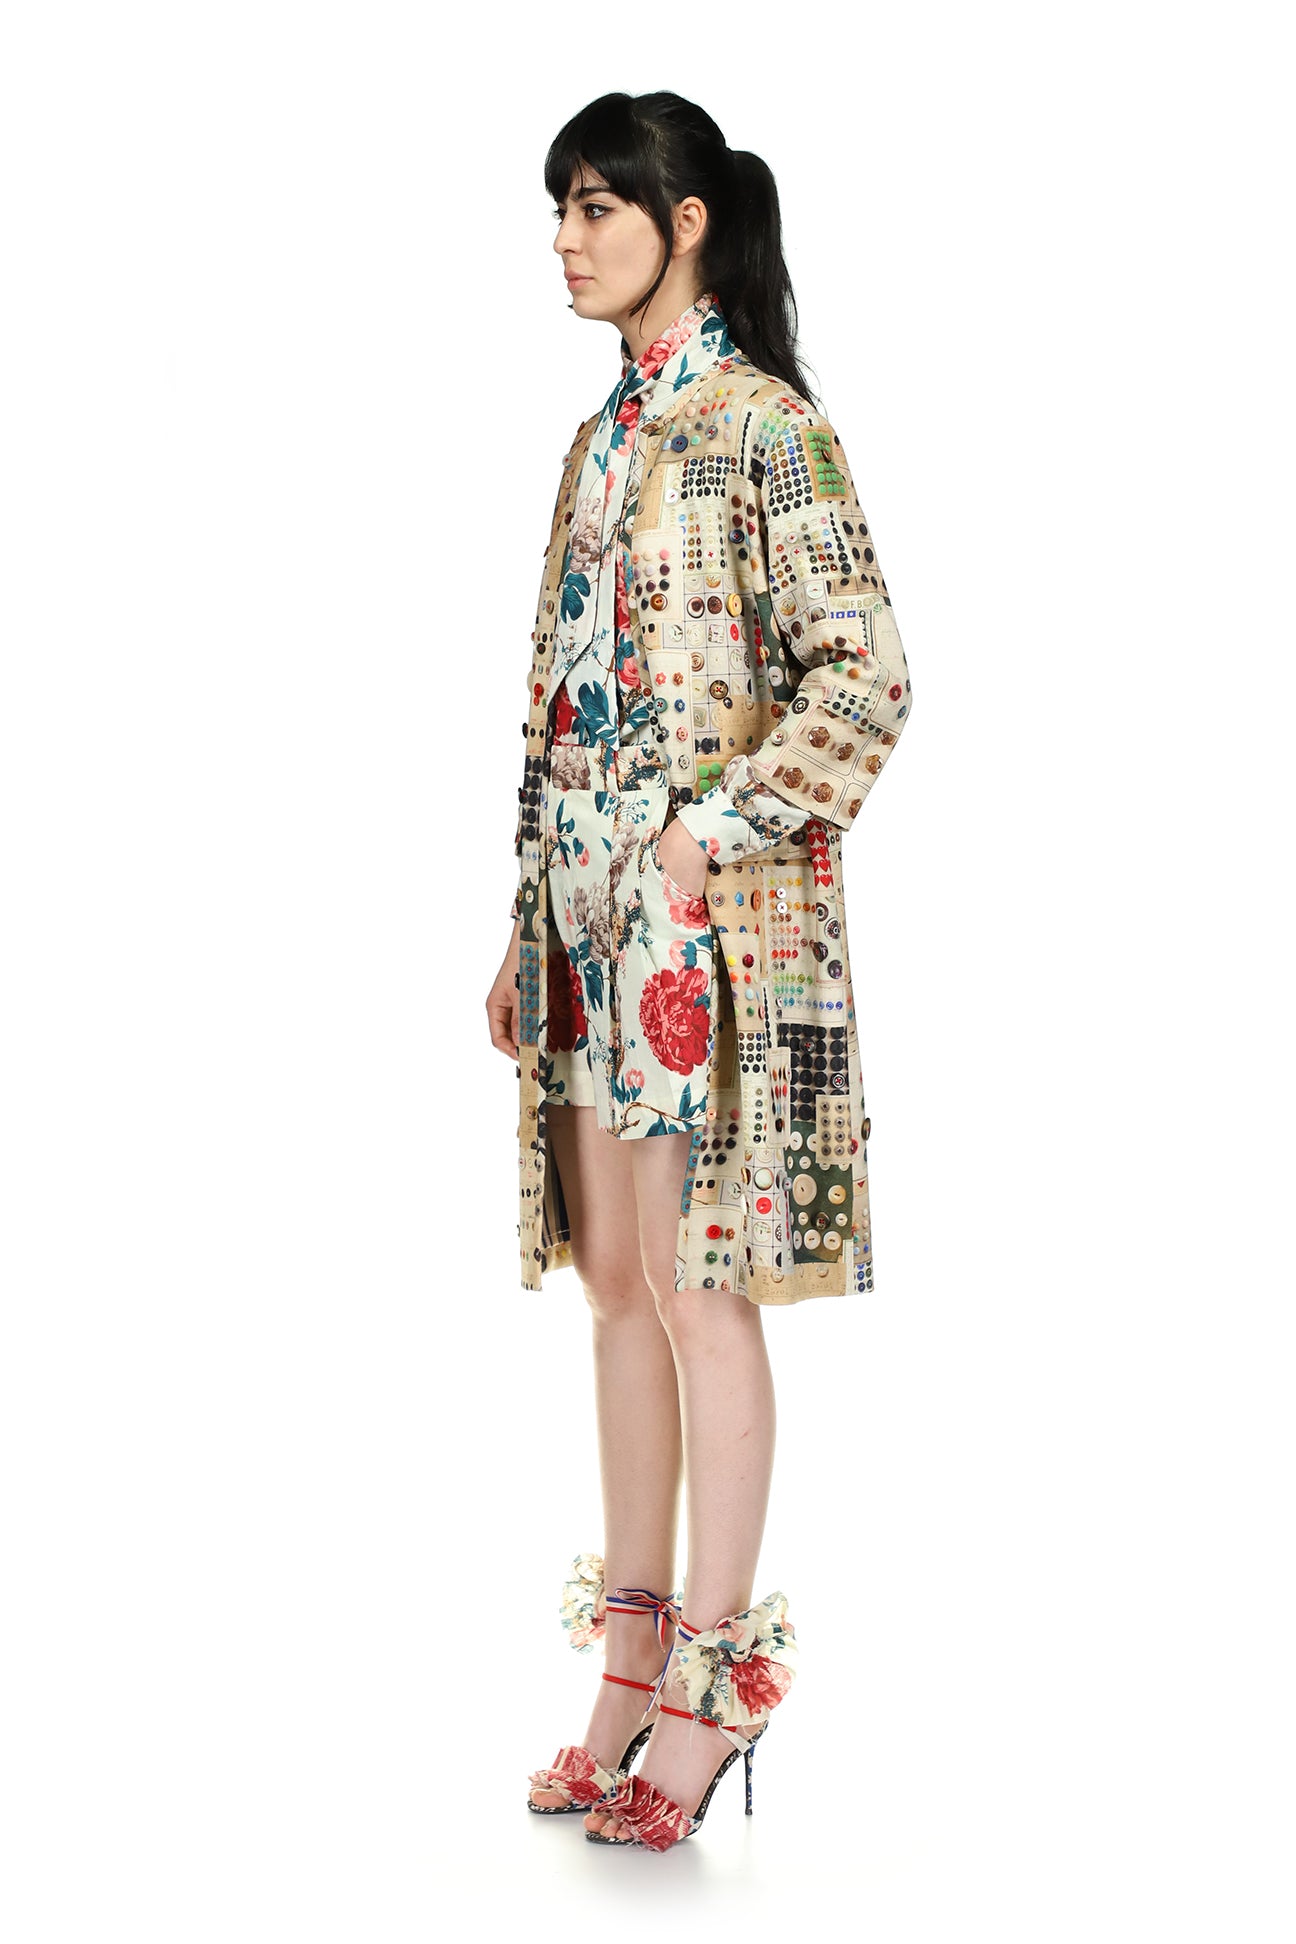 'Button Card Shoppe' Duster Coat with Button Embellishment - Women's Jackets & Coats - Libertine